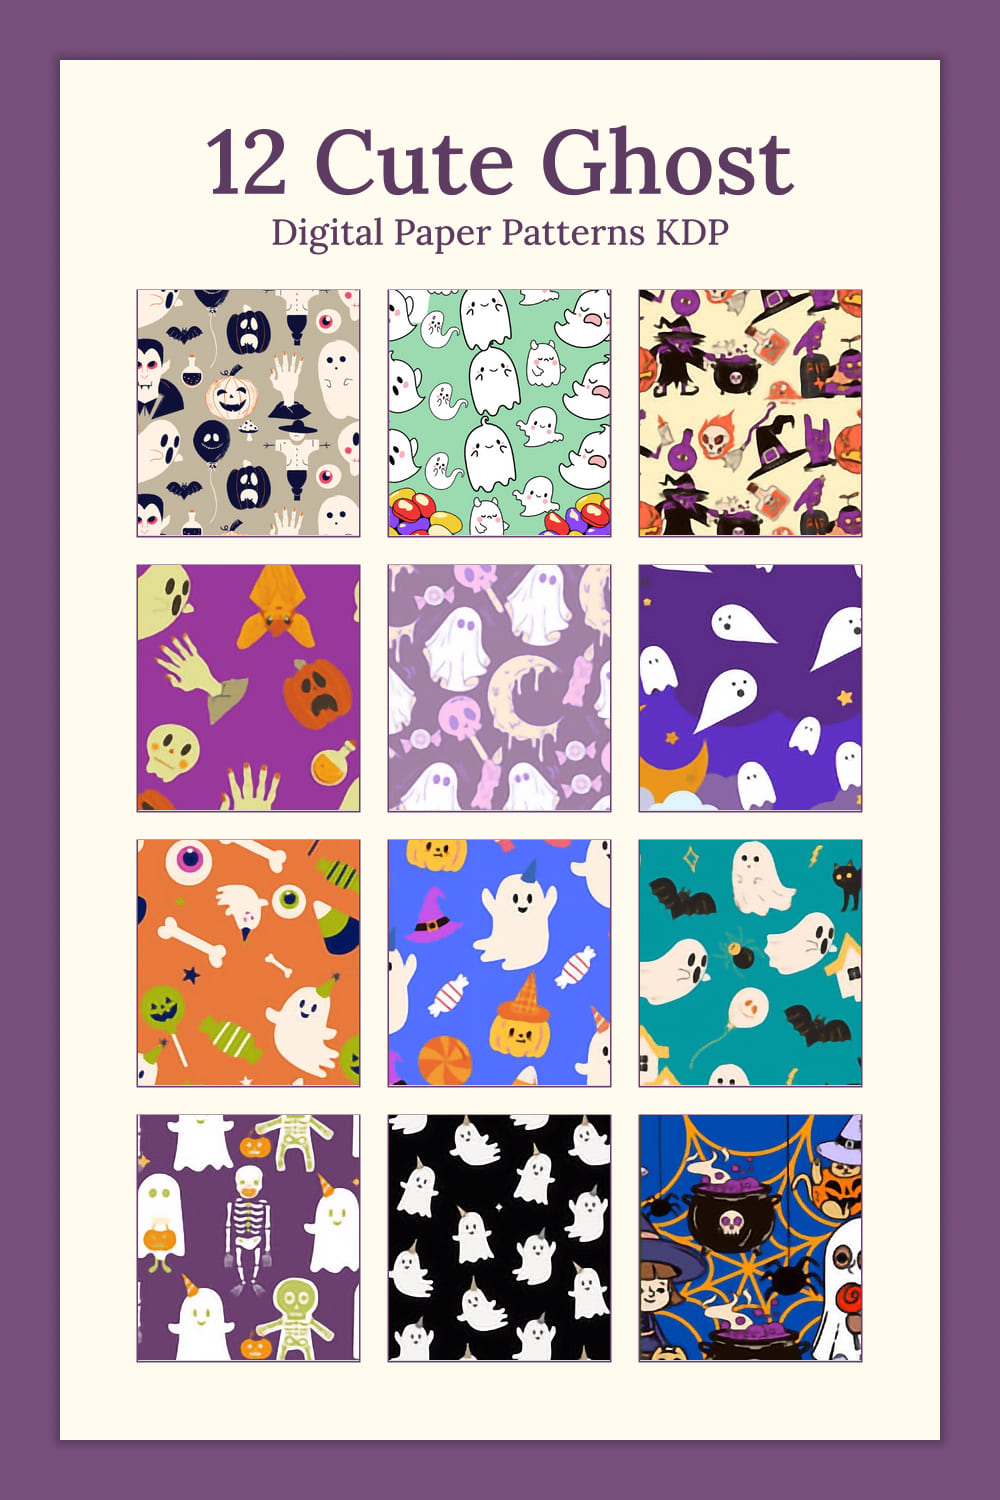 12 Cute Ghost Digital Paper Patterns KDP - Pinterest.